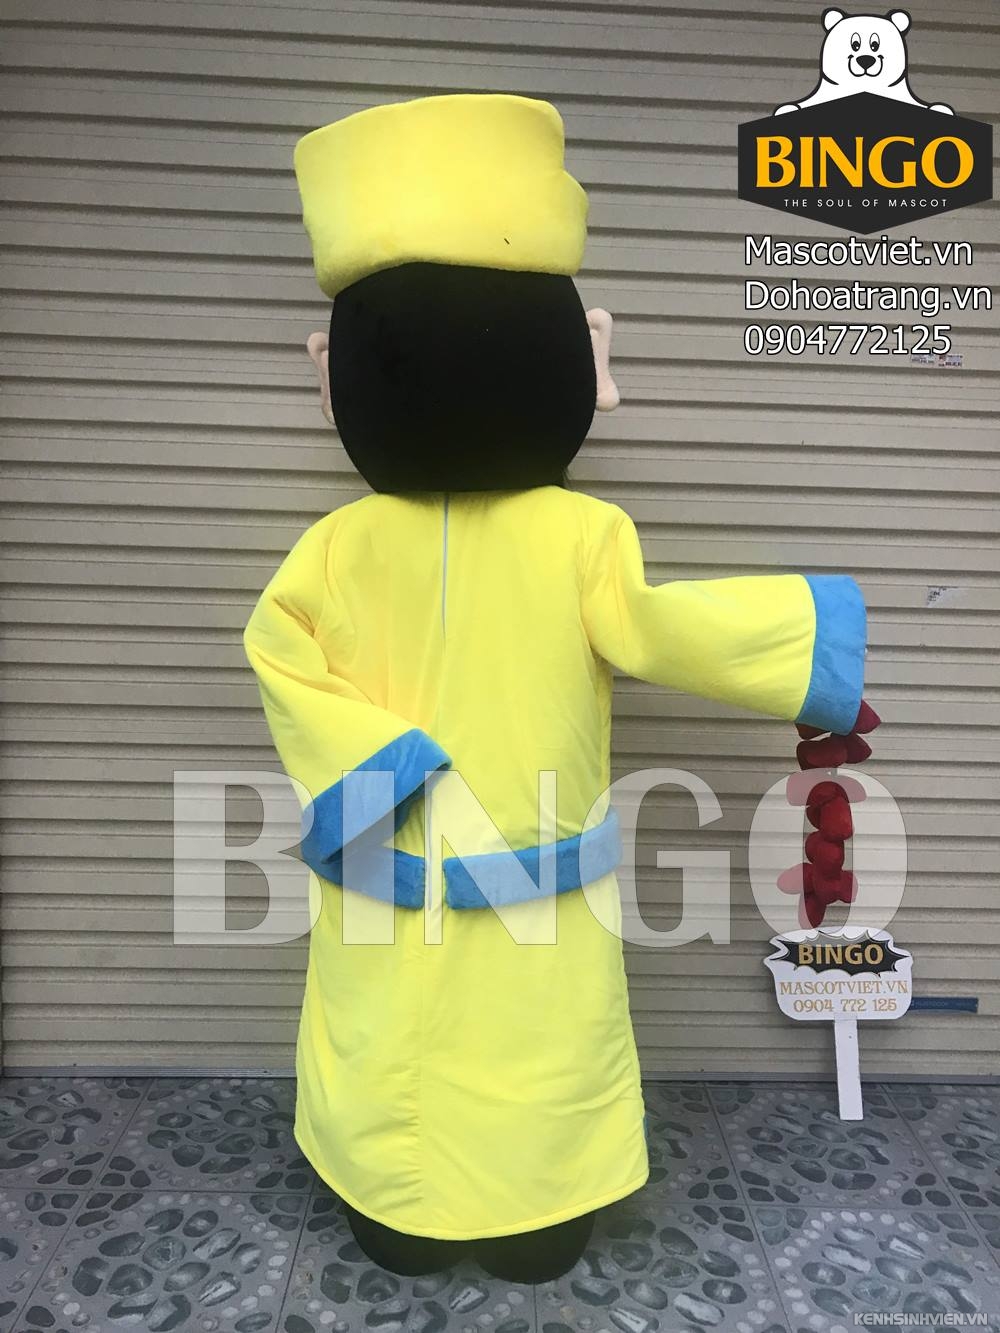 mascot-ong-phuc-bingo-costumes-0904772125-2-.jpg